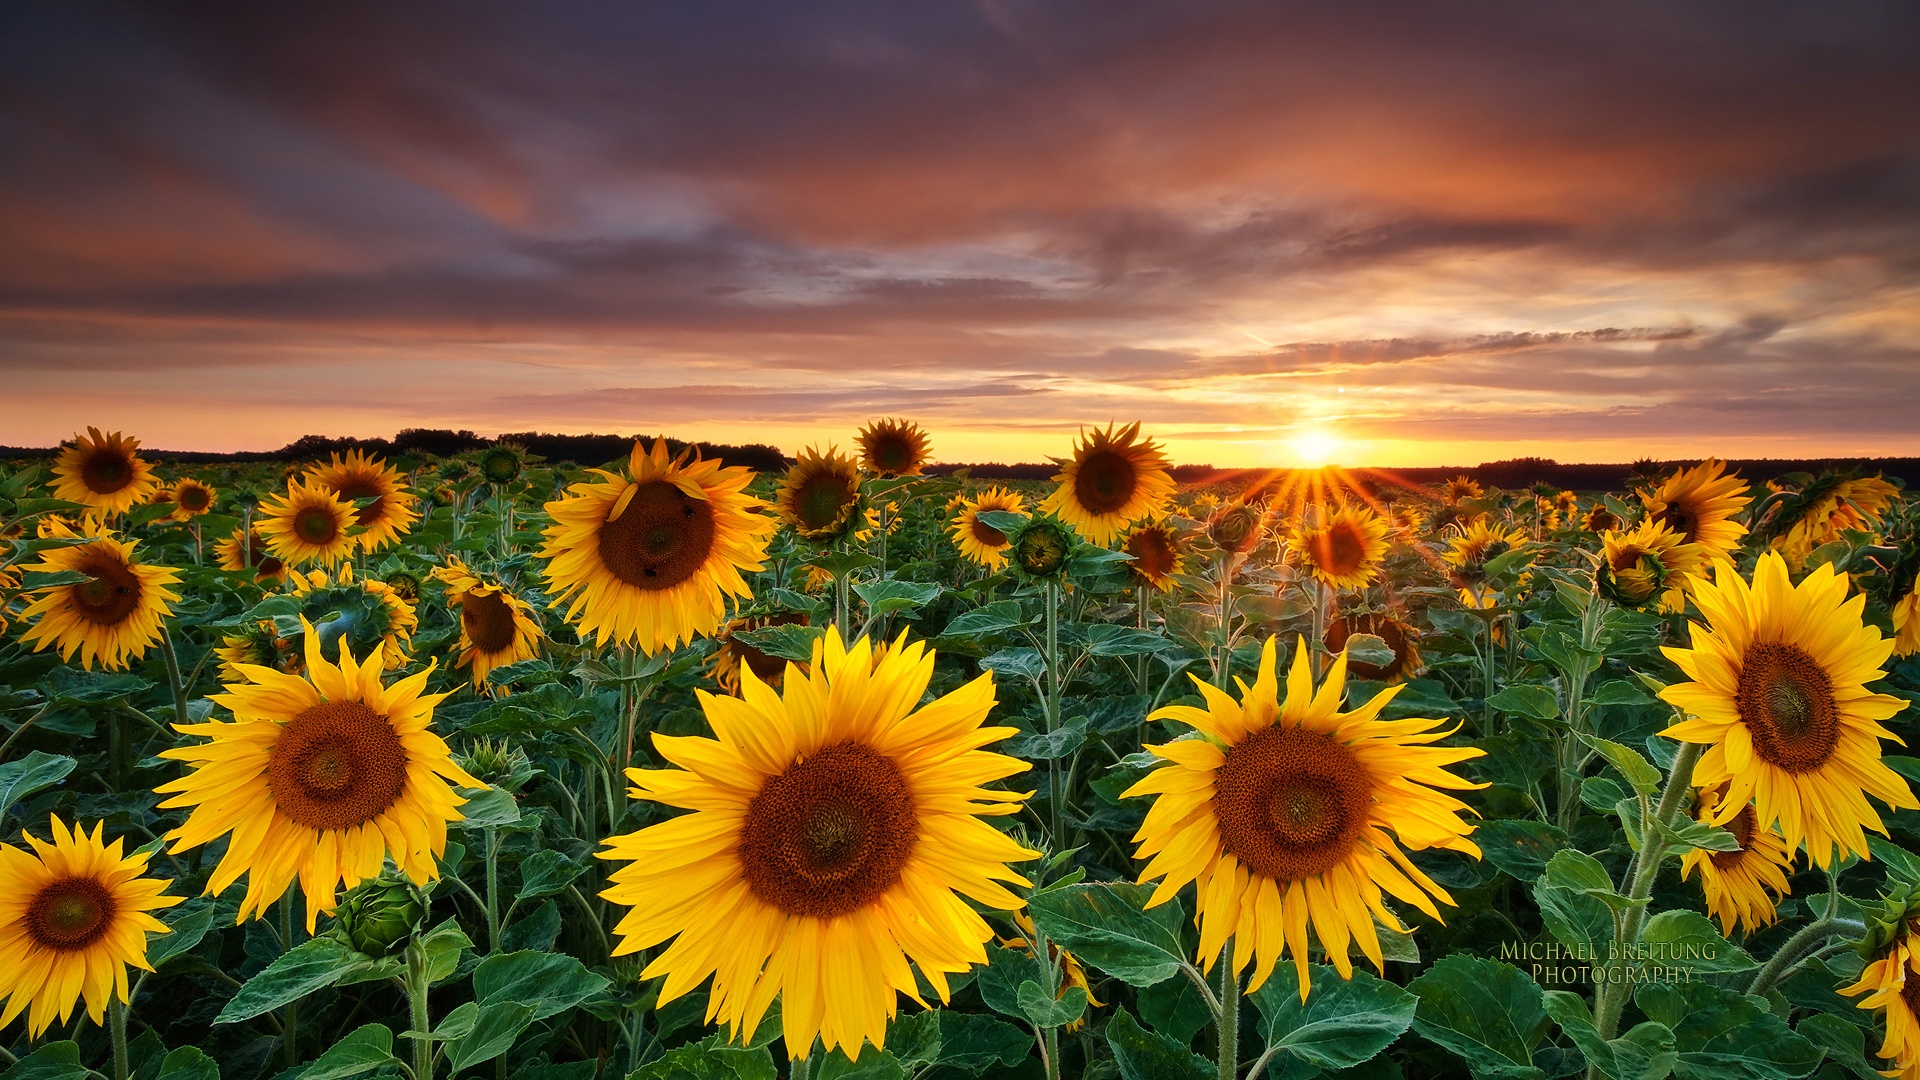 Gallery For Gt Desktop Background Sunflowers